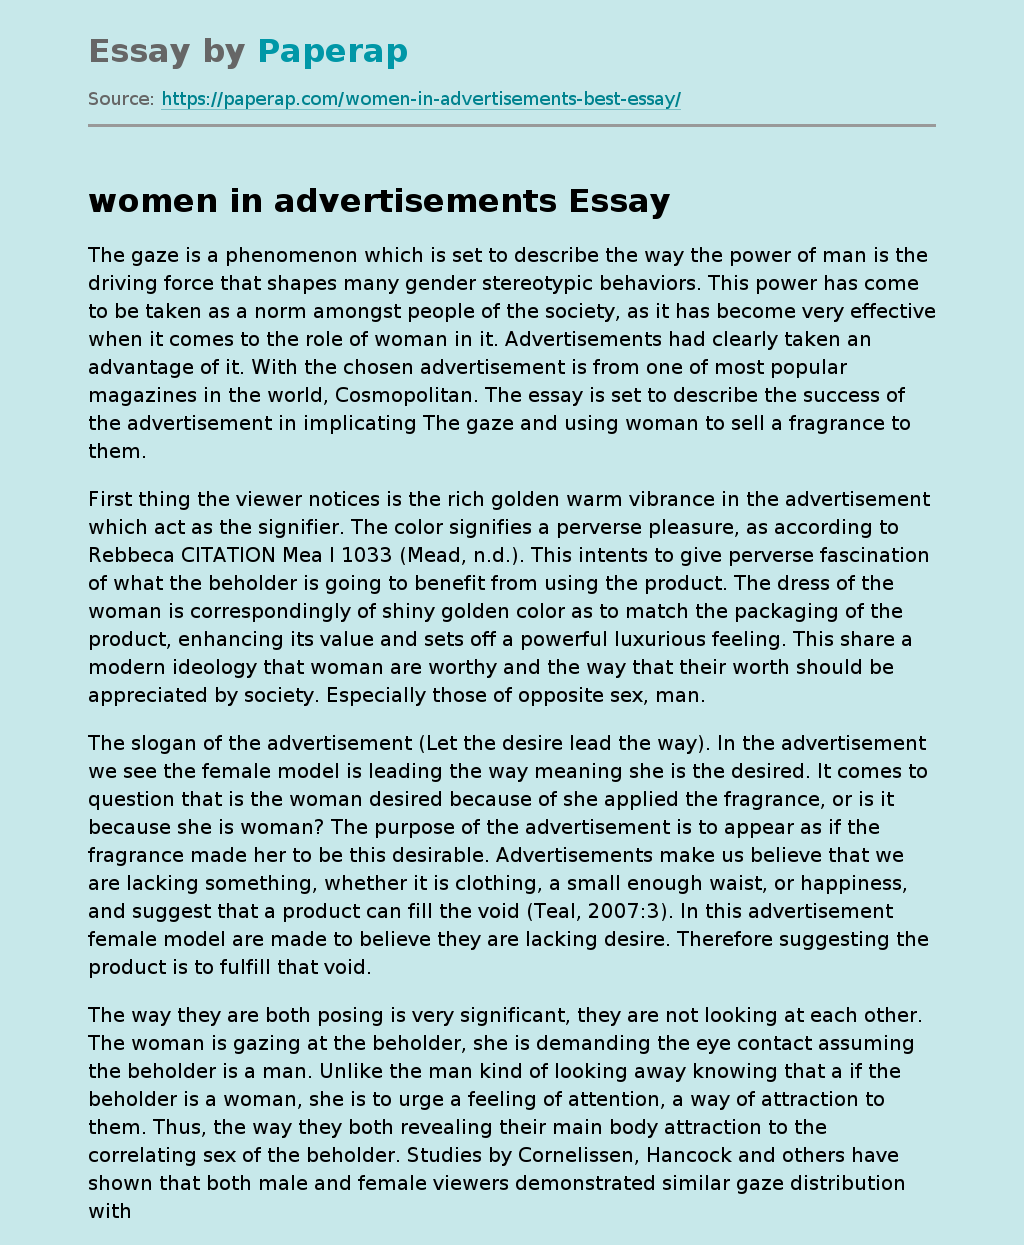 Women in Advertisements